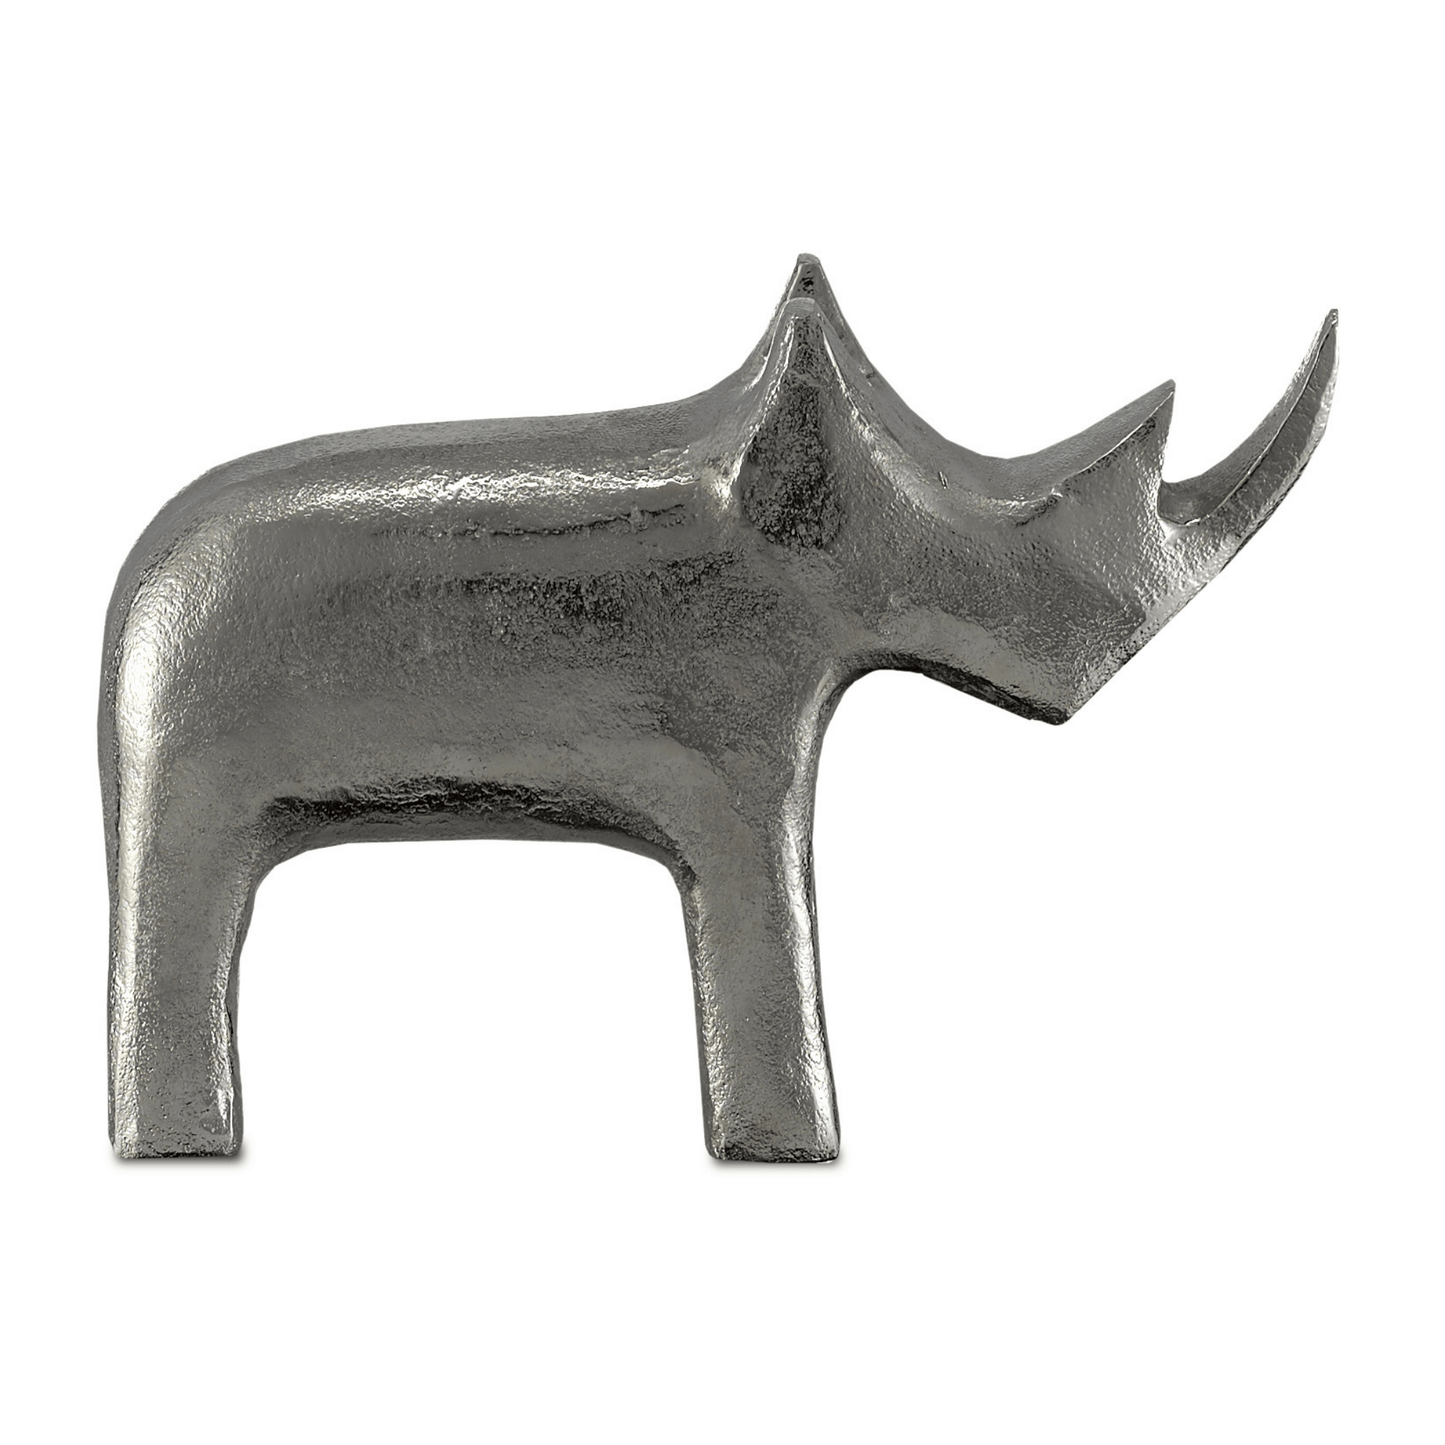 Kano Silver Large Rhino H: 7.5" W: 3.25" D: 10.75"